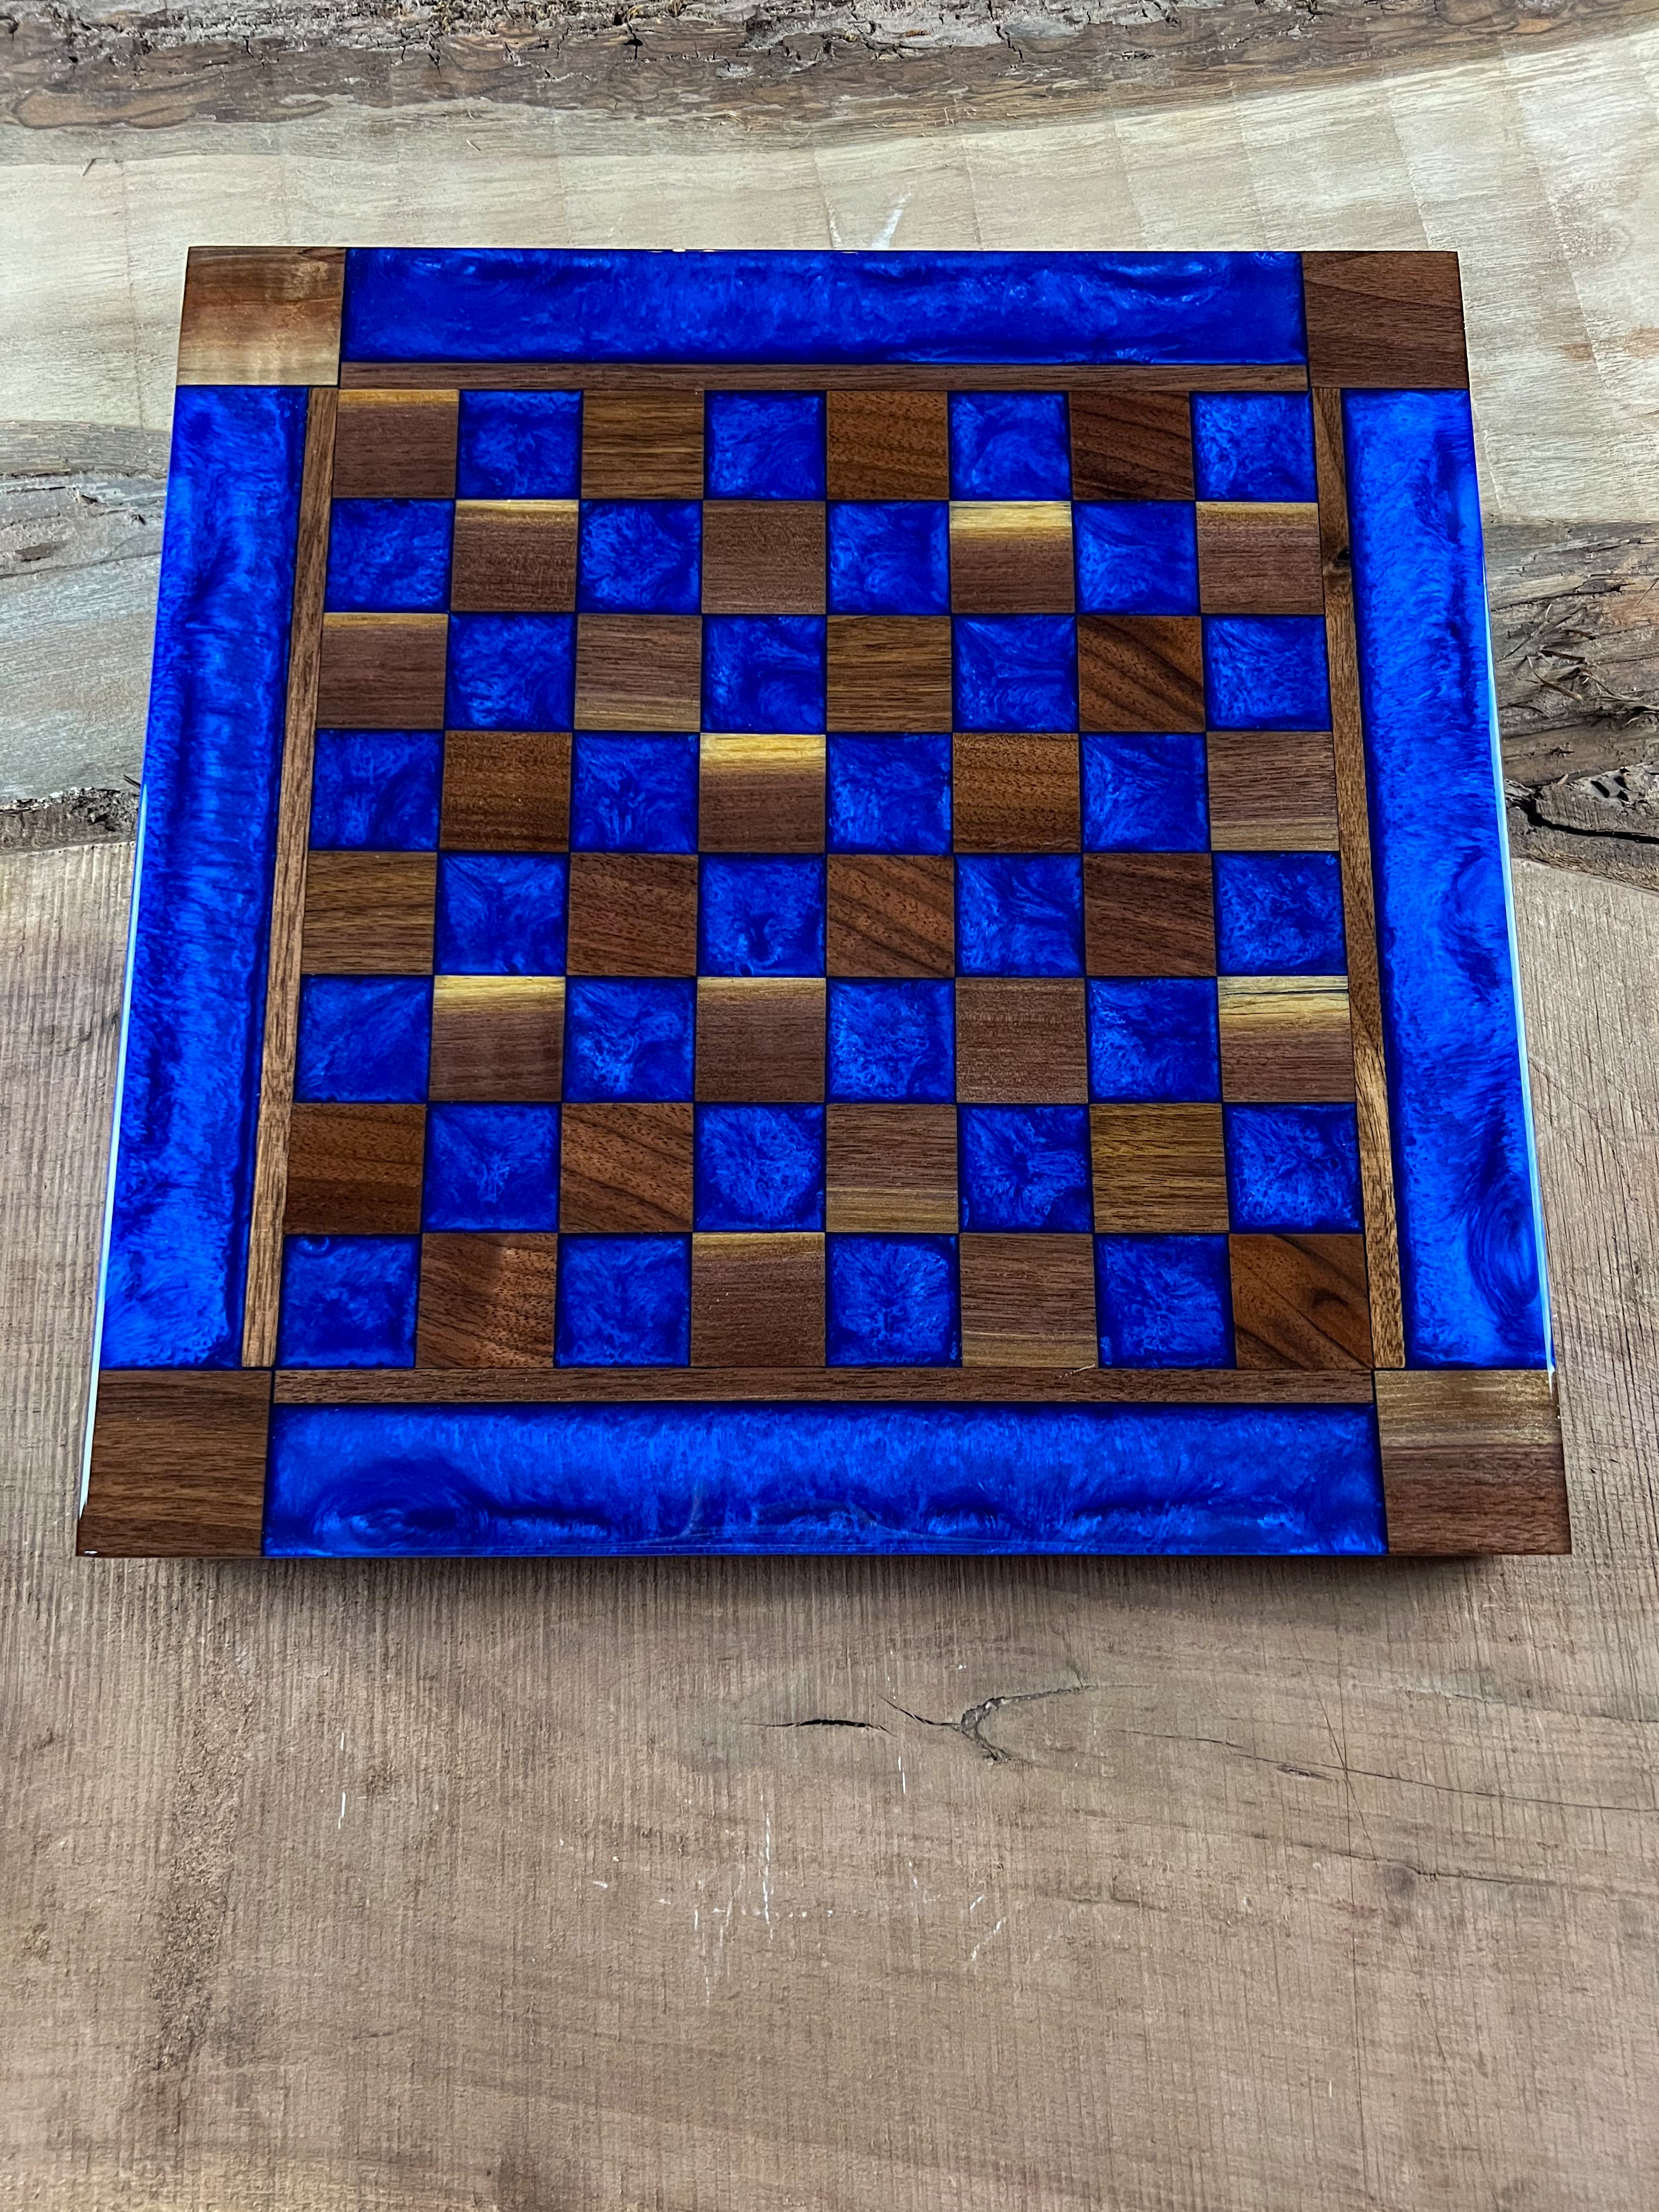 Deep Blue Walnut Chess Board (With Border)